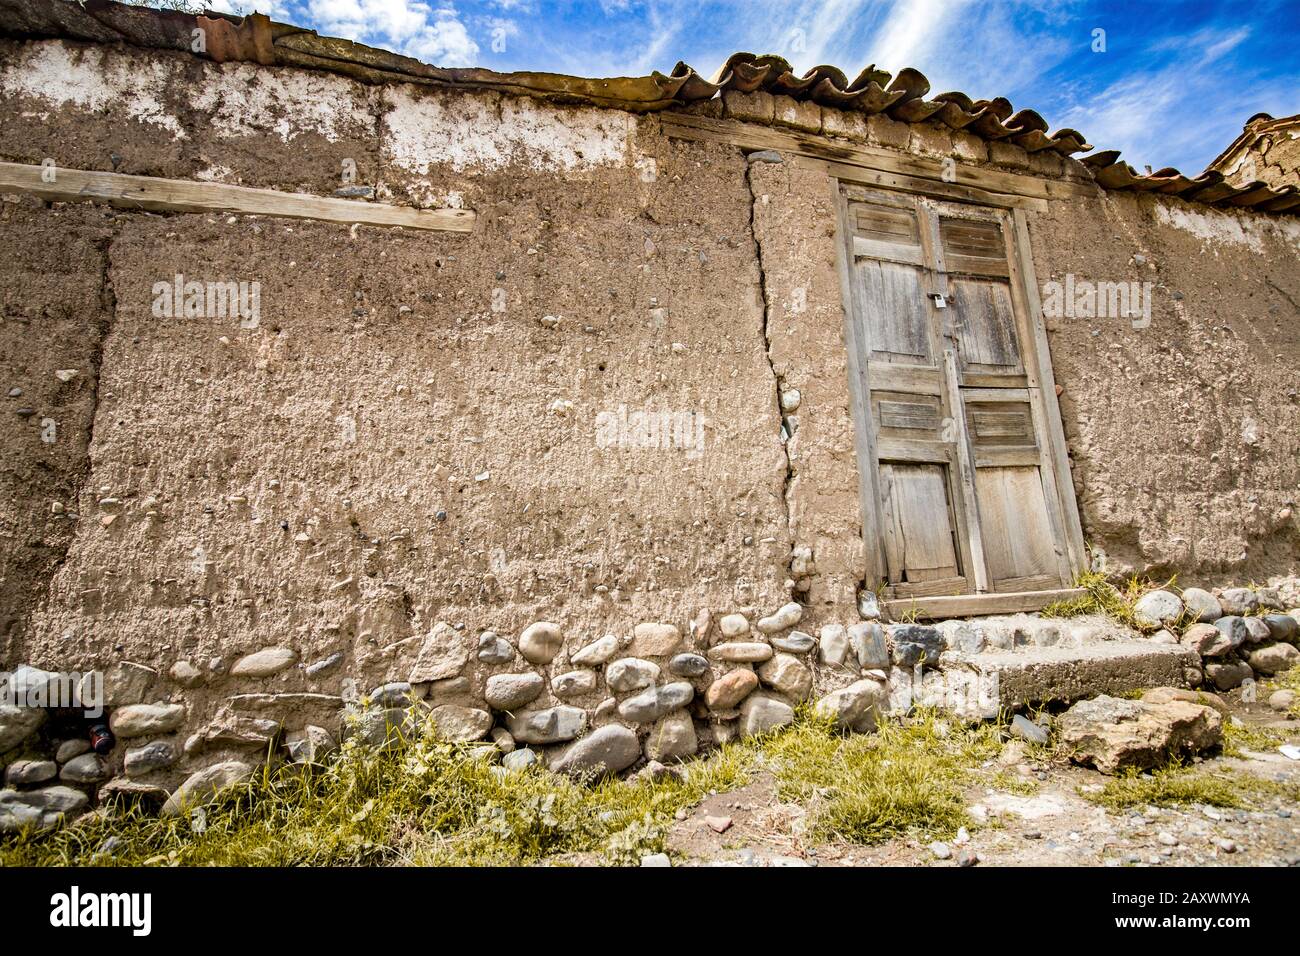 A small town located in Huaraz, Ancash, Perú. Stock Photo